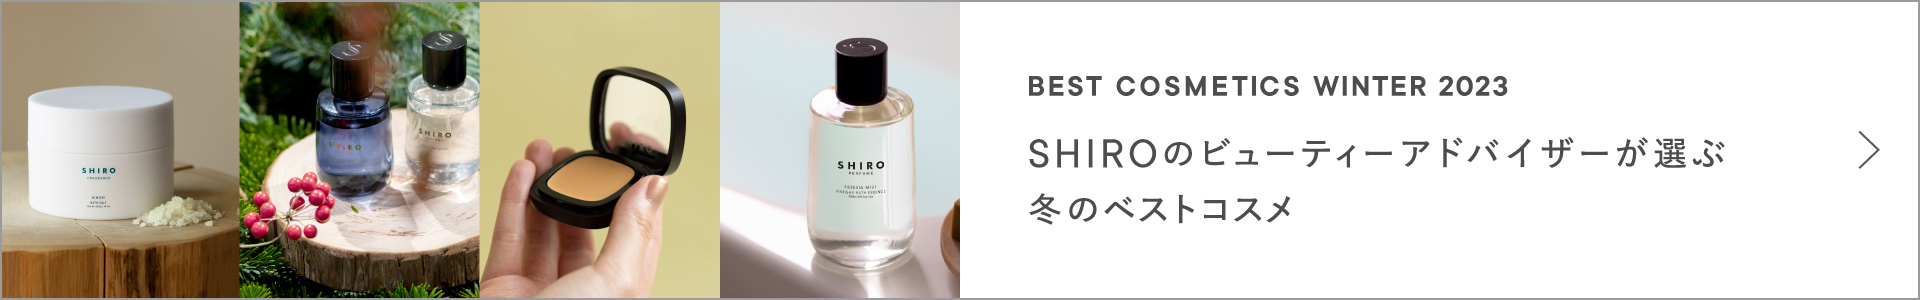 SHIRO PERFUME FAVOURITE DRESS | SHIROオフィシャルサイト